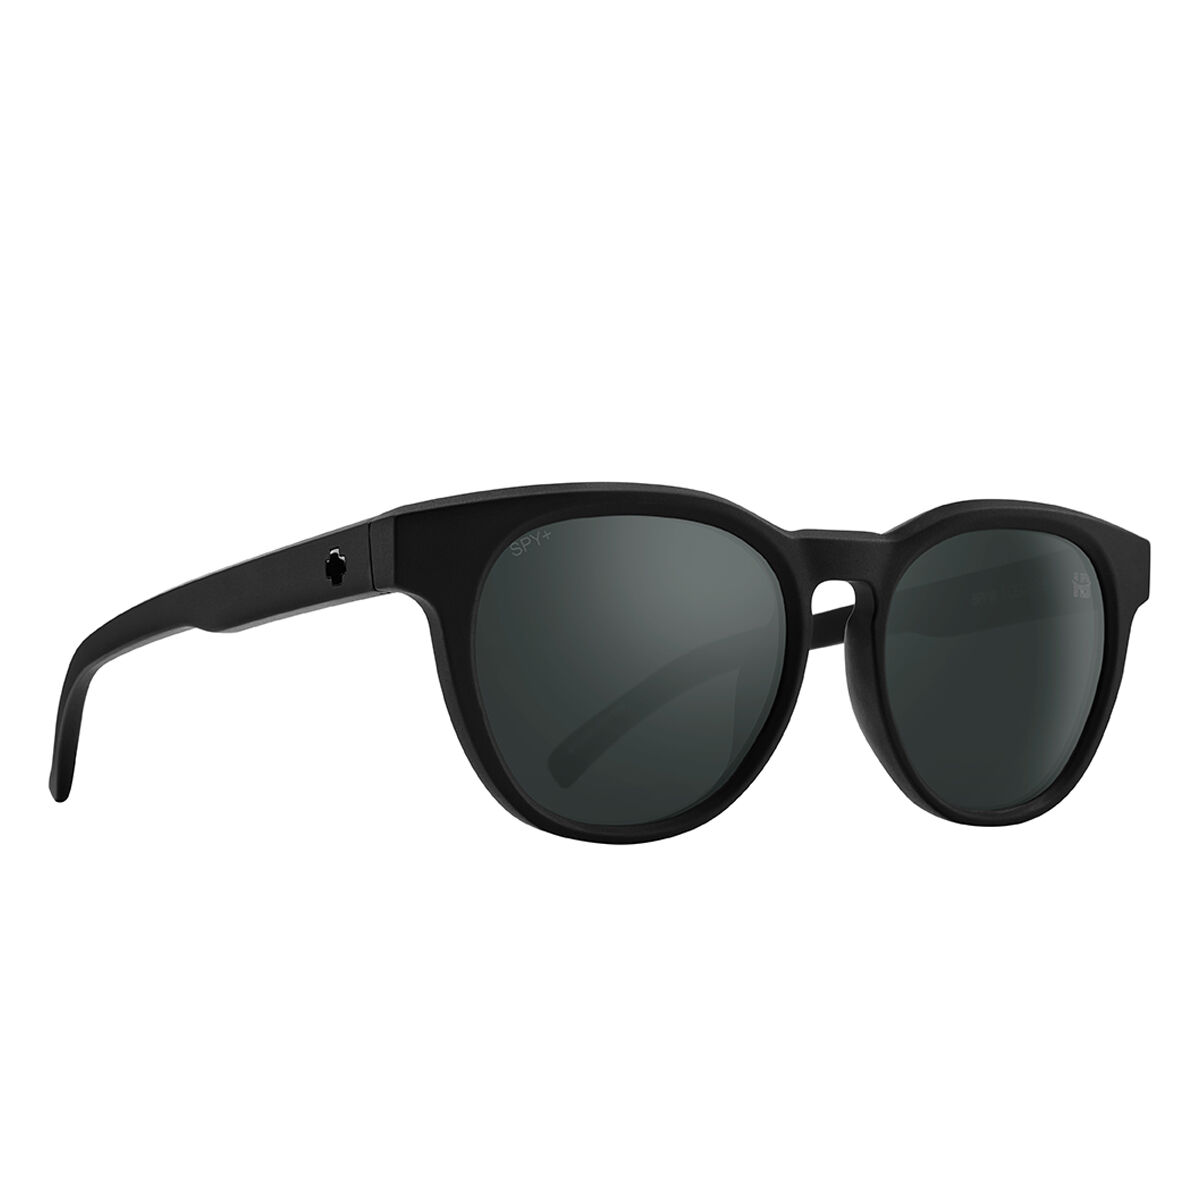 CEDROS Sunglasses by Spy Optic